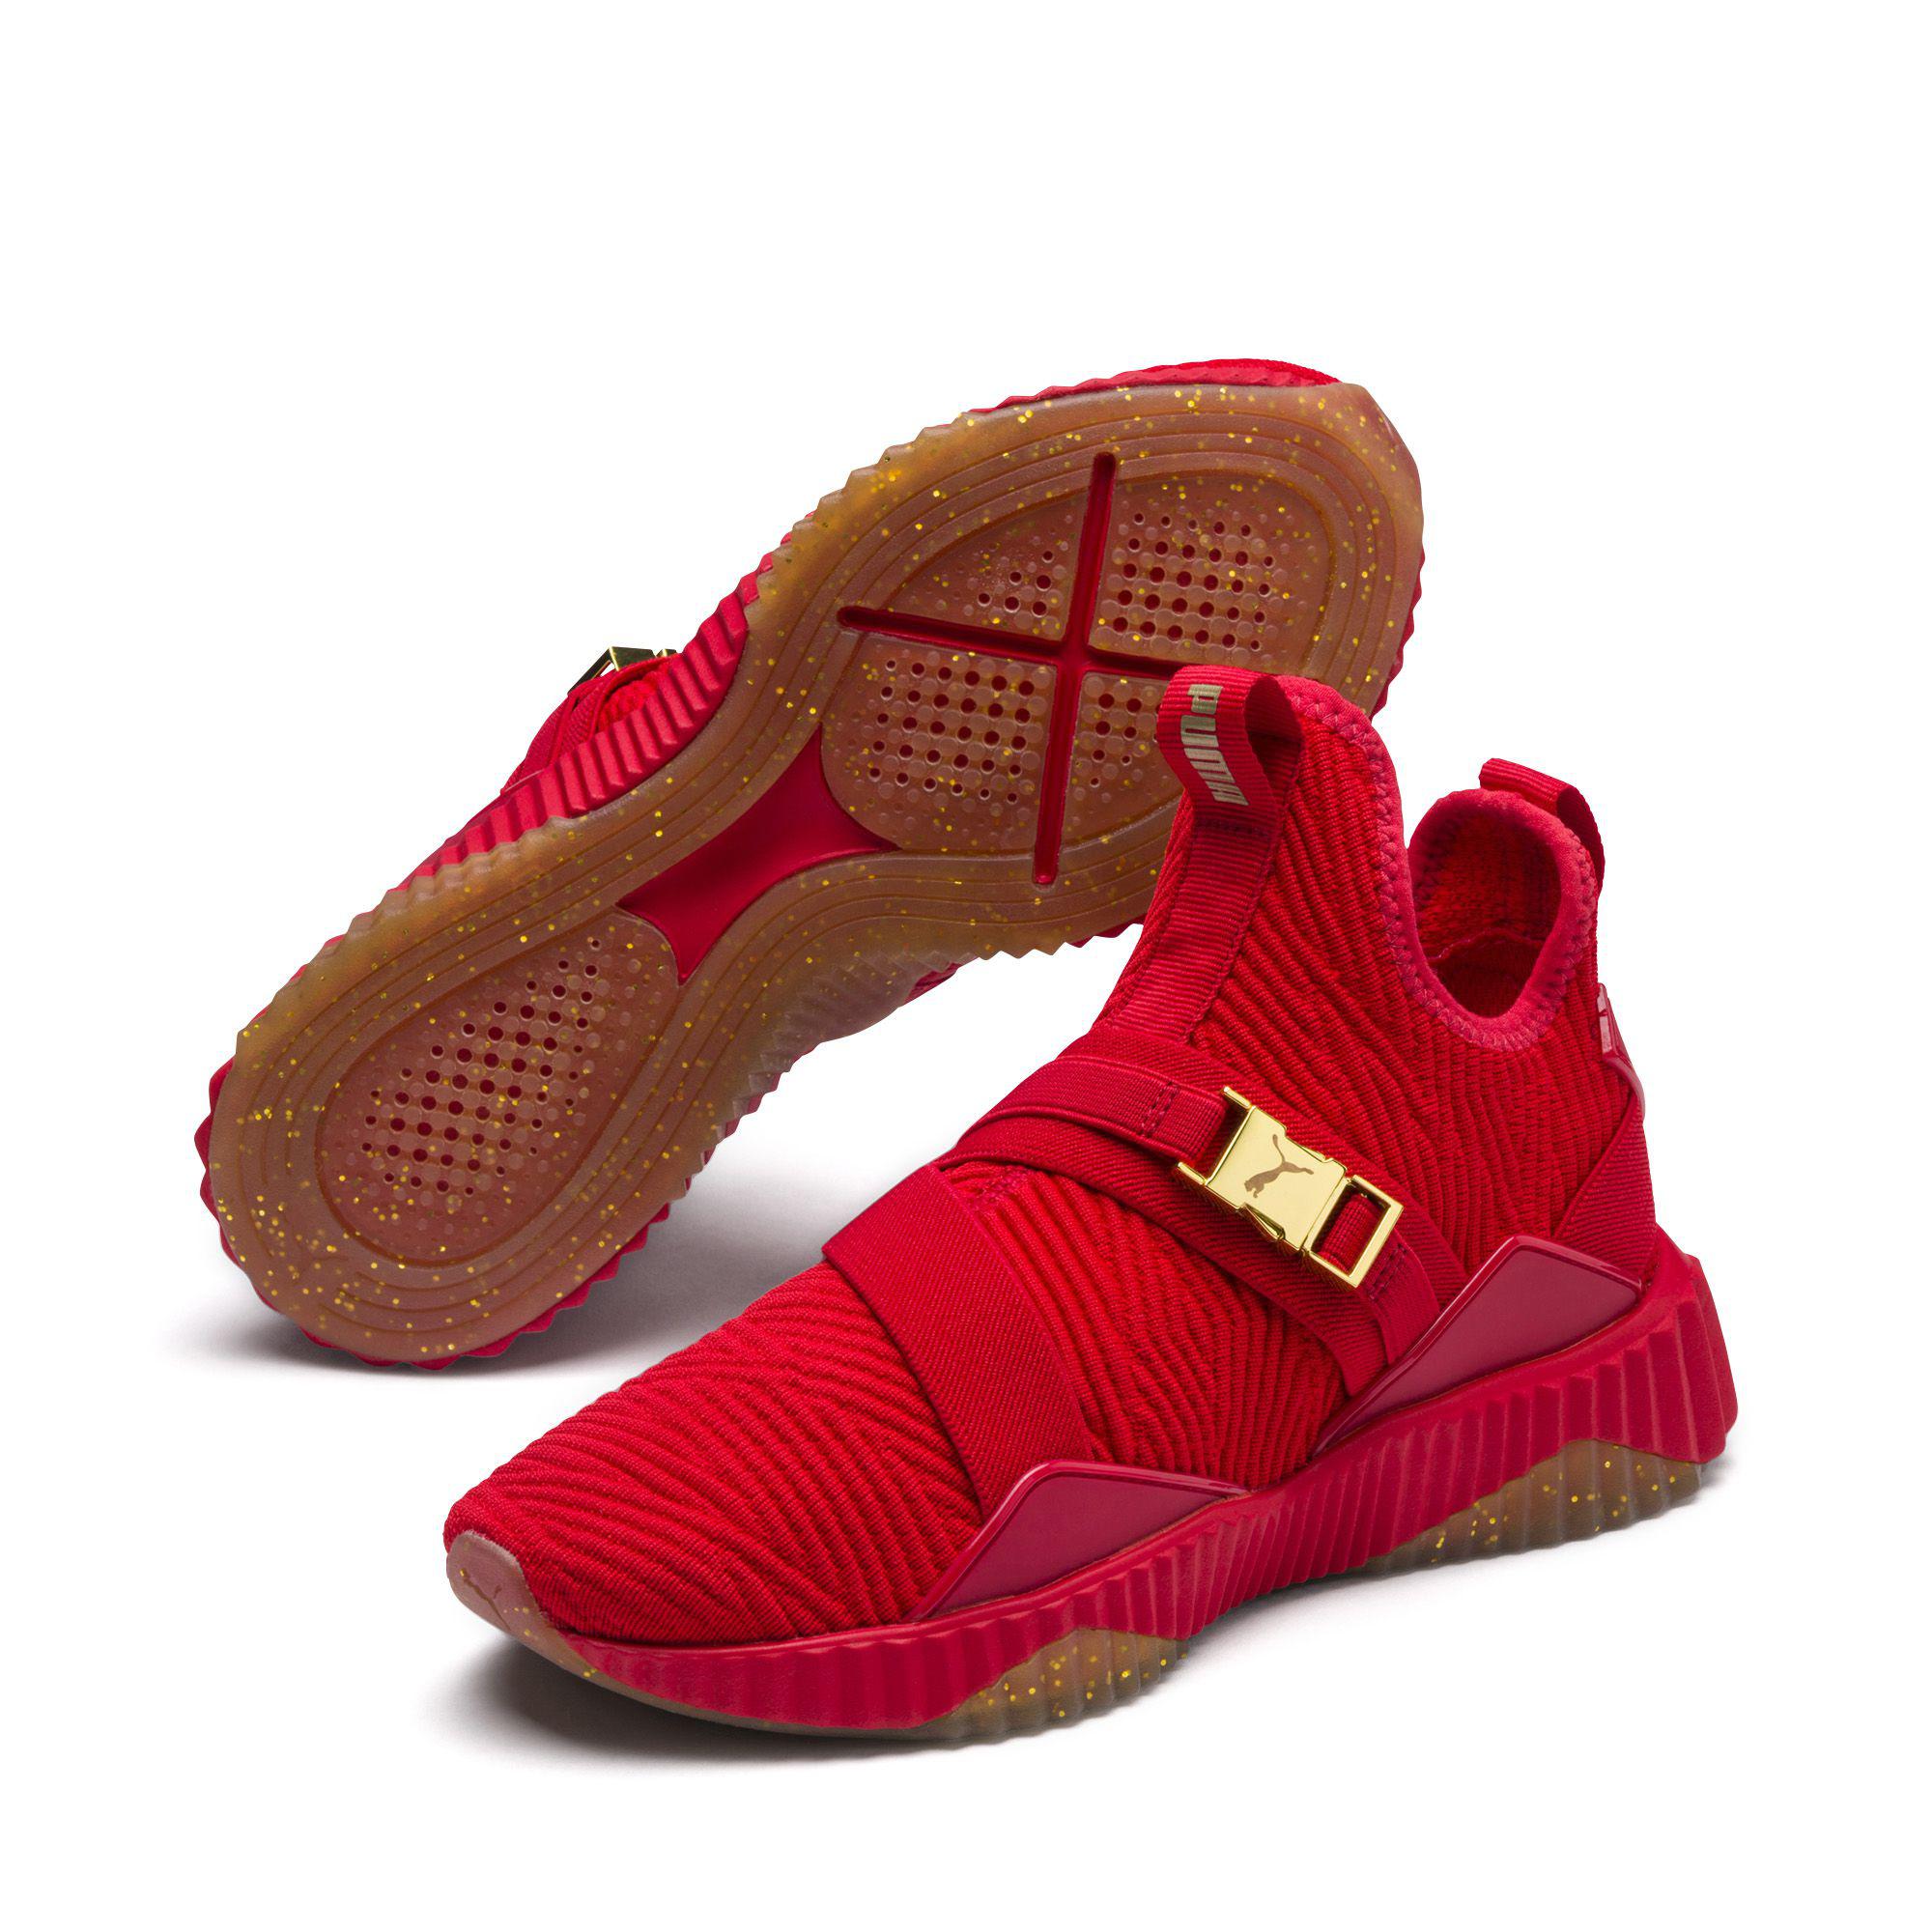 puma shoes women red